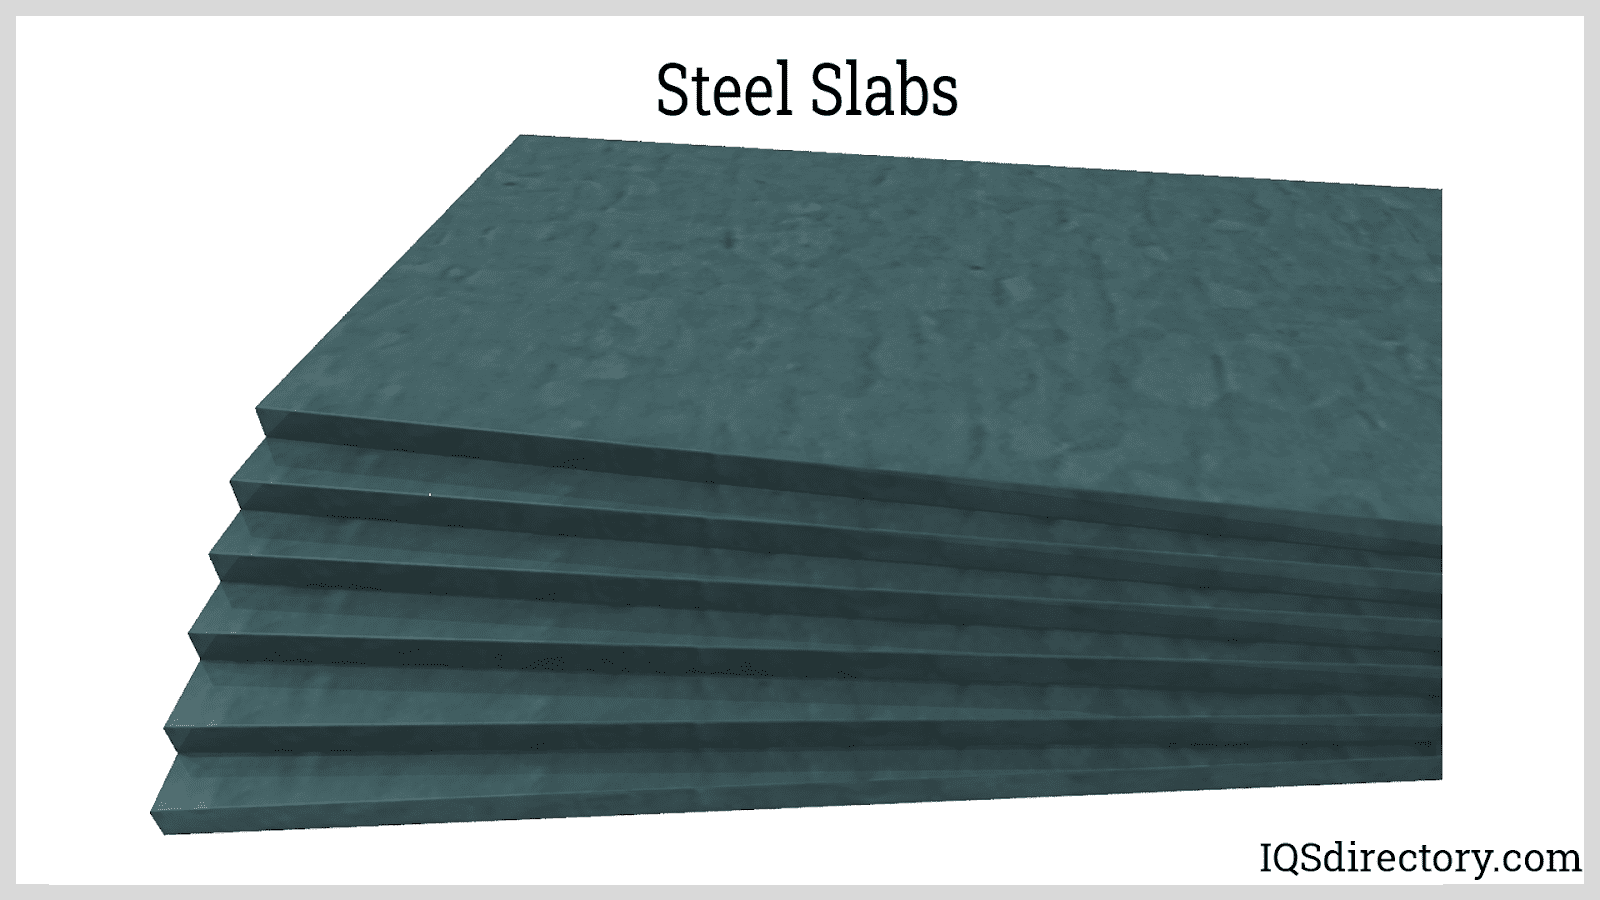 Steel Slabs